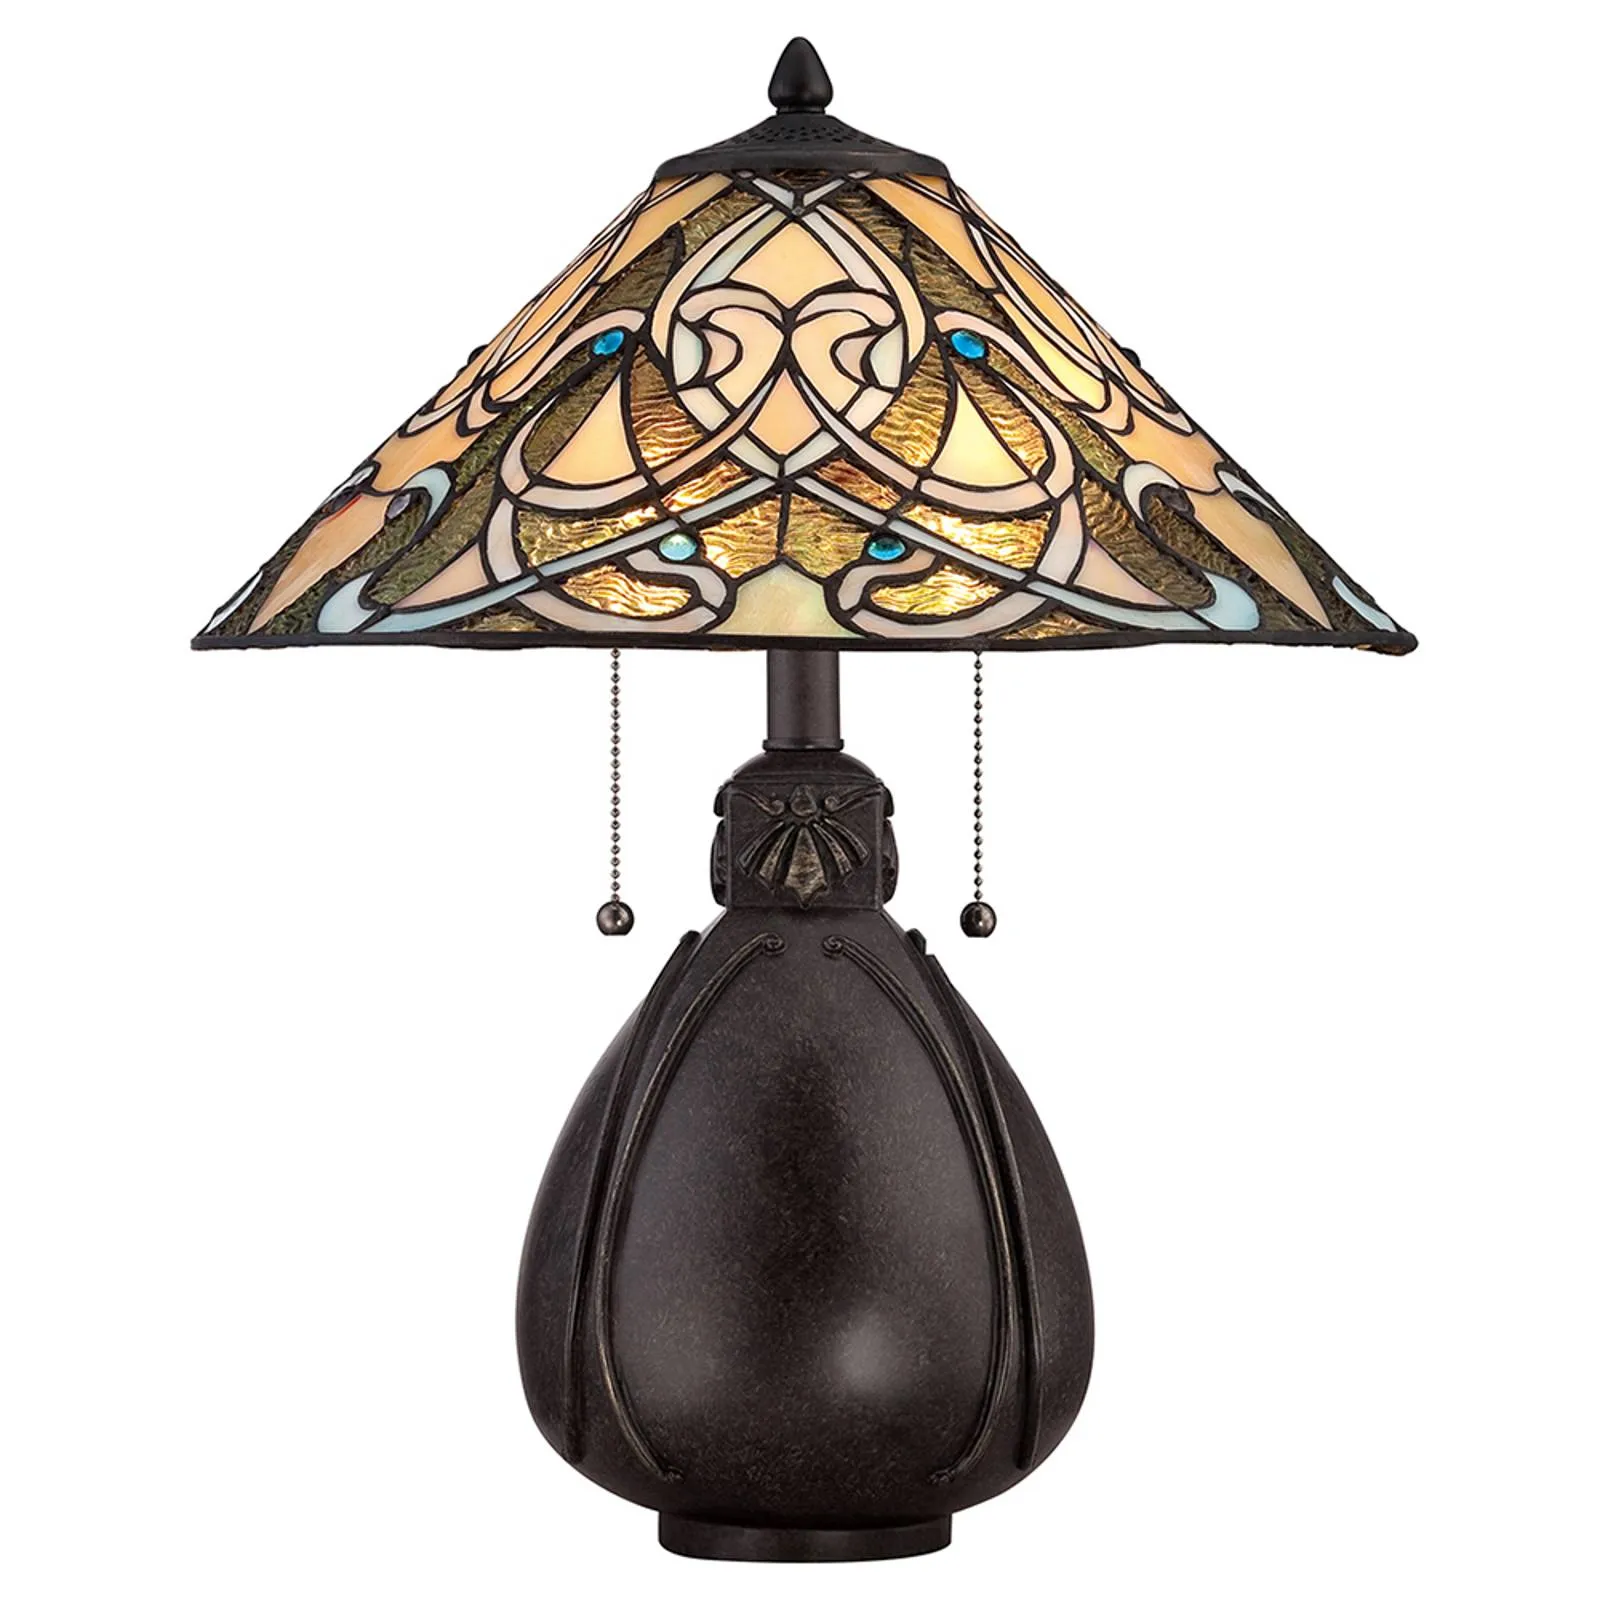 Wonderful Tiffany table lamp India